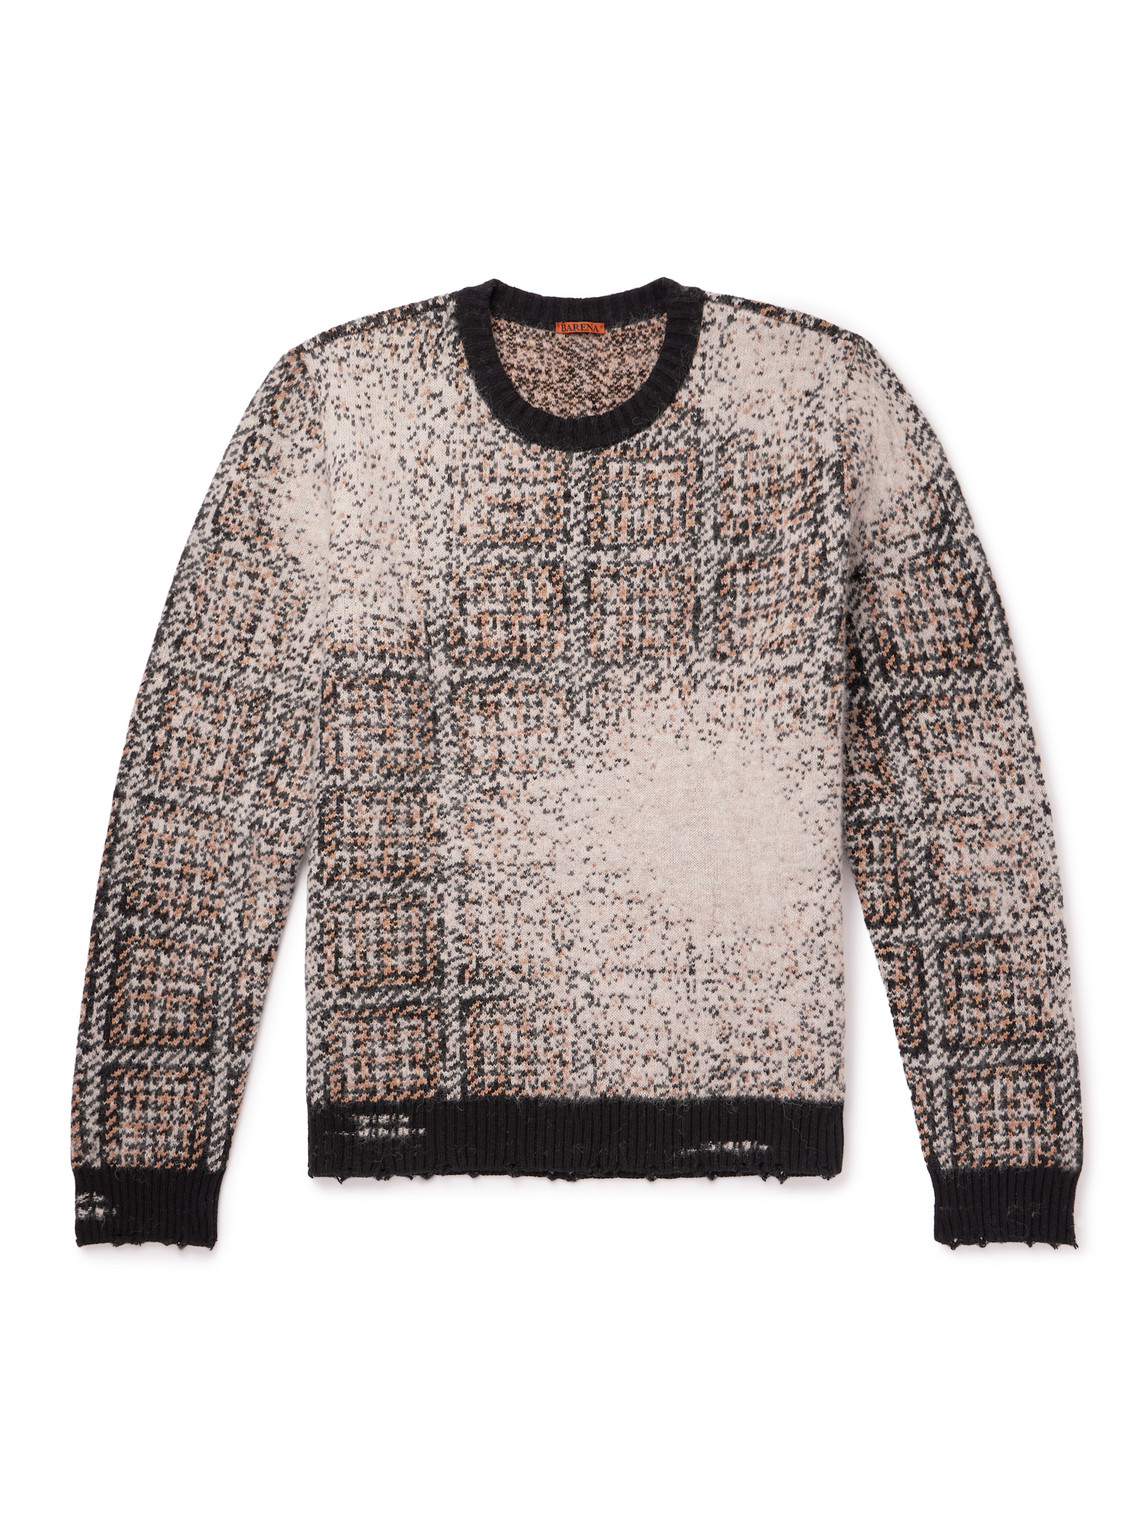 Desdo Distressed Virgin Wool-Blend Sweater